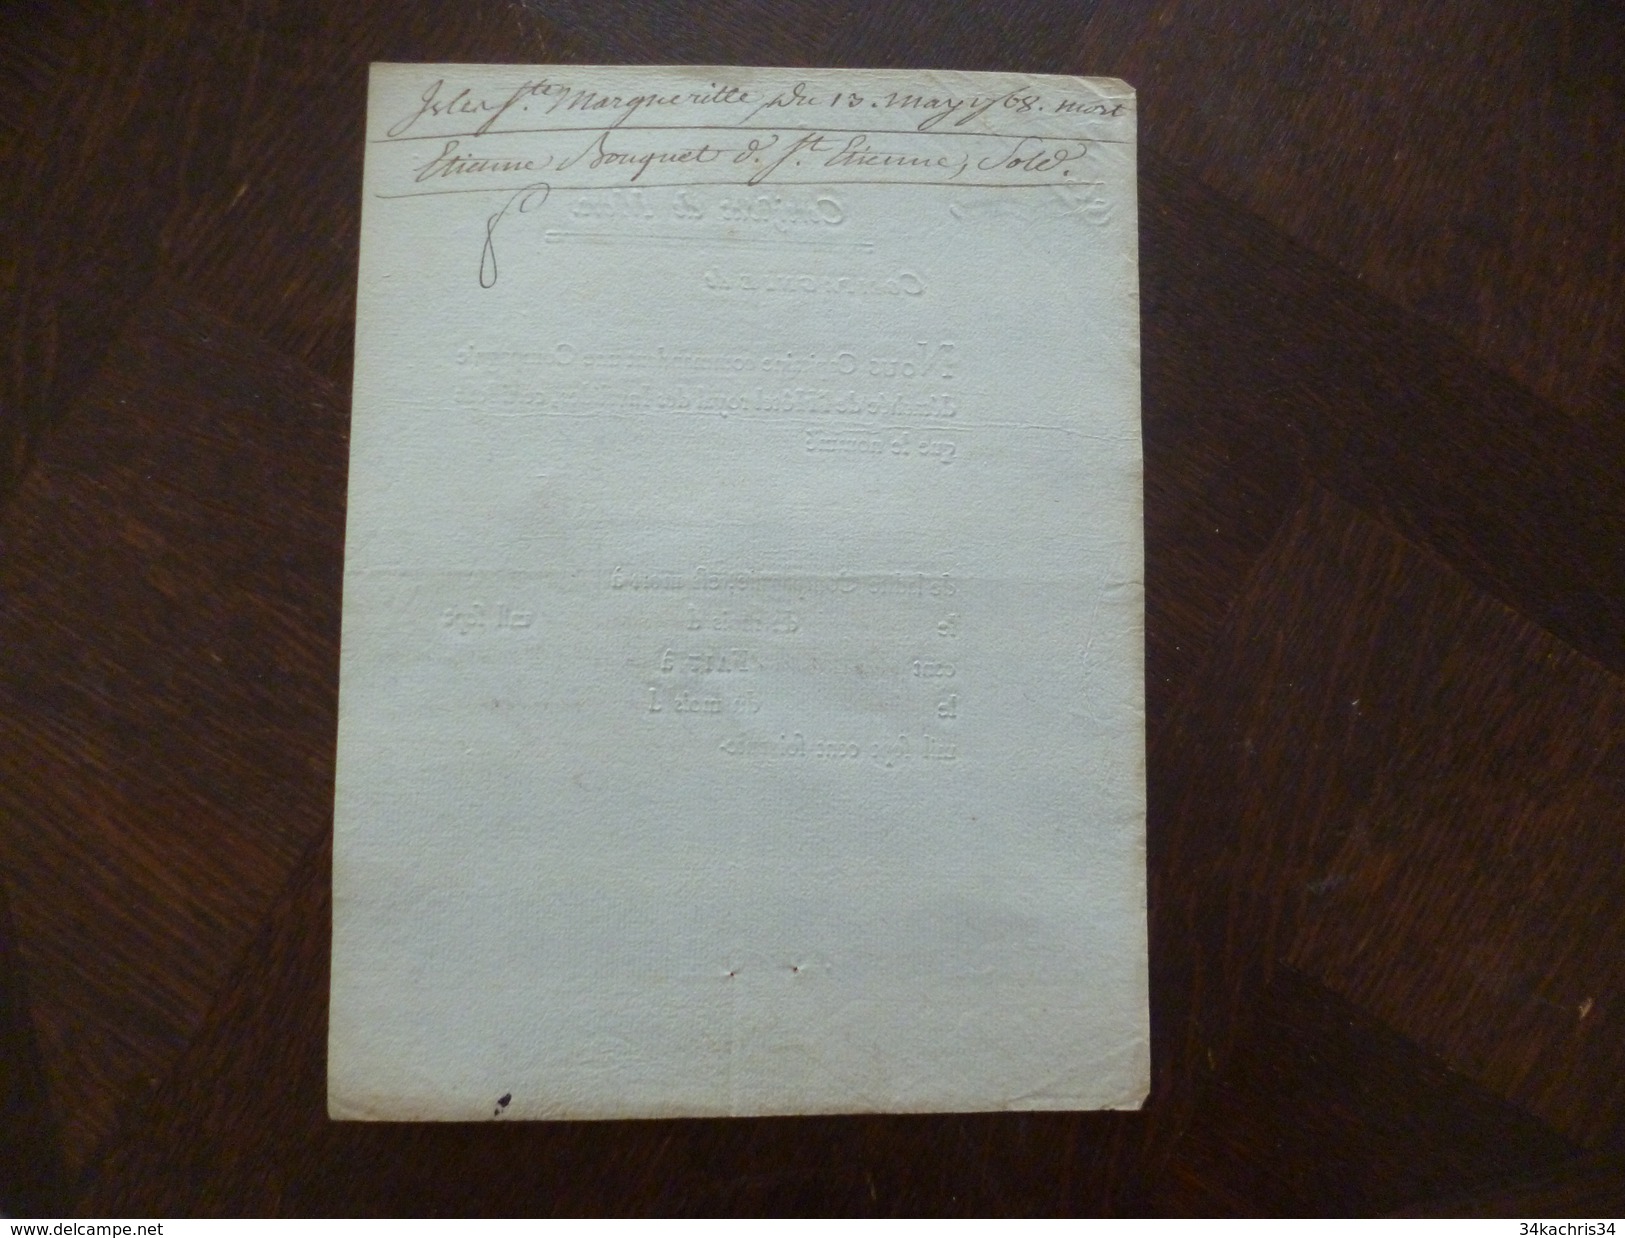 Militaria Certificat De Mort Castellane 30/12/1768 Cie De Laurans - Documenten